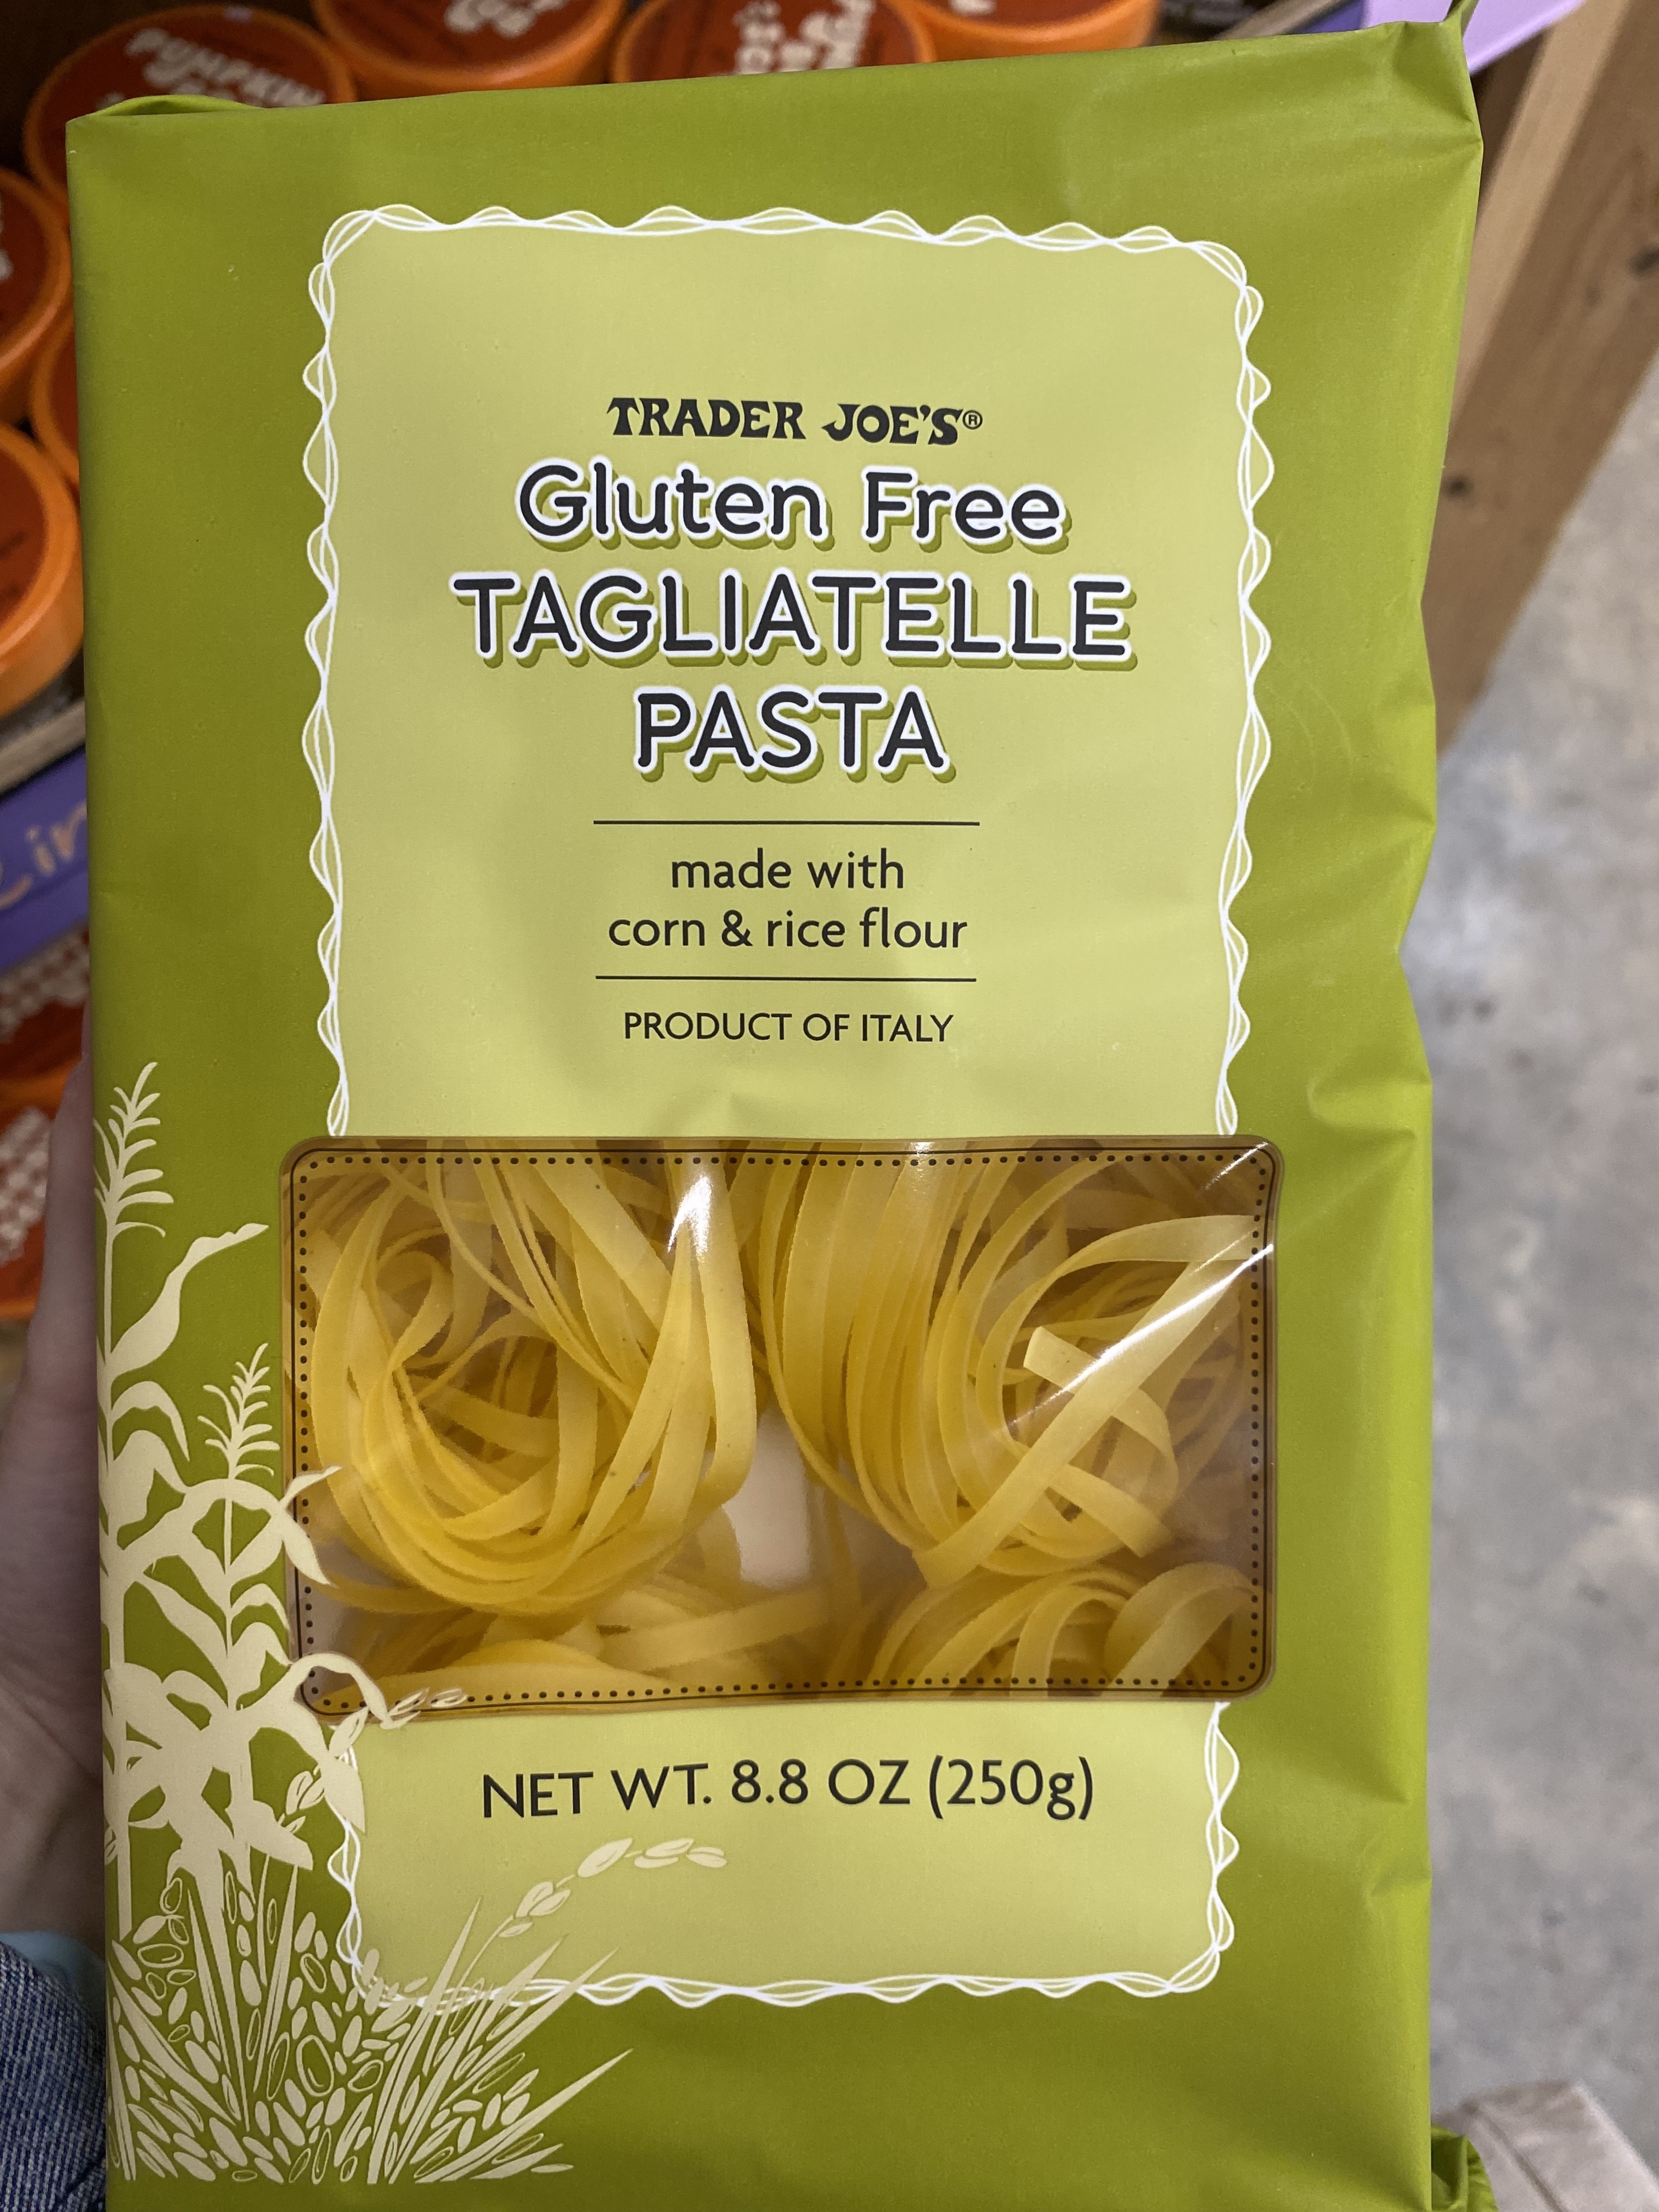 a package of gluten free tagliatelle pasta